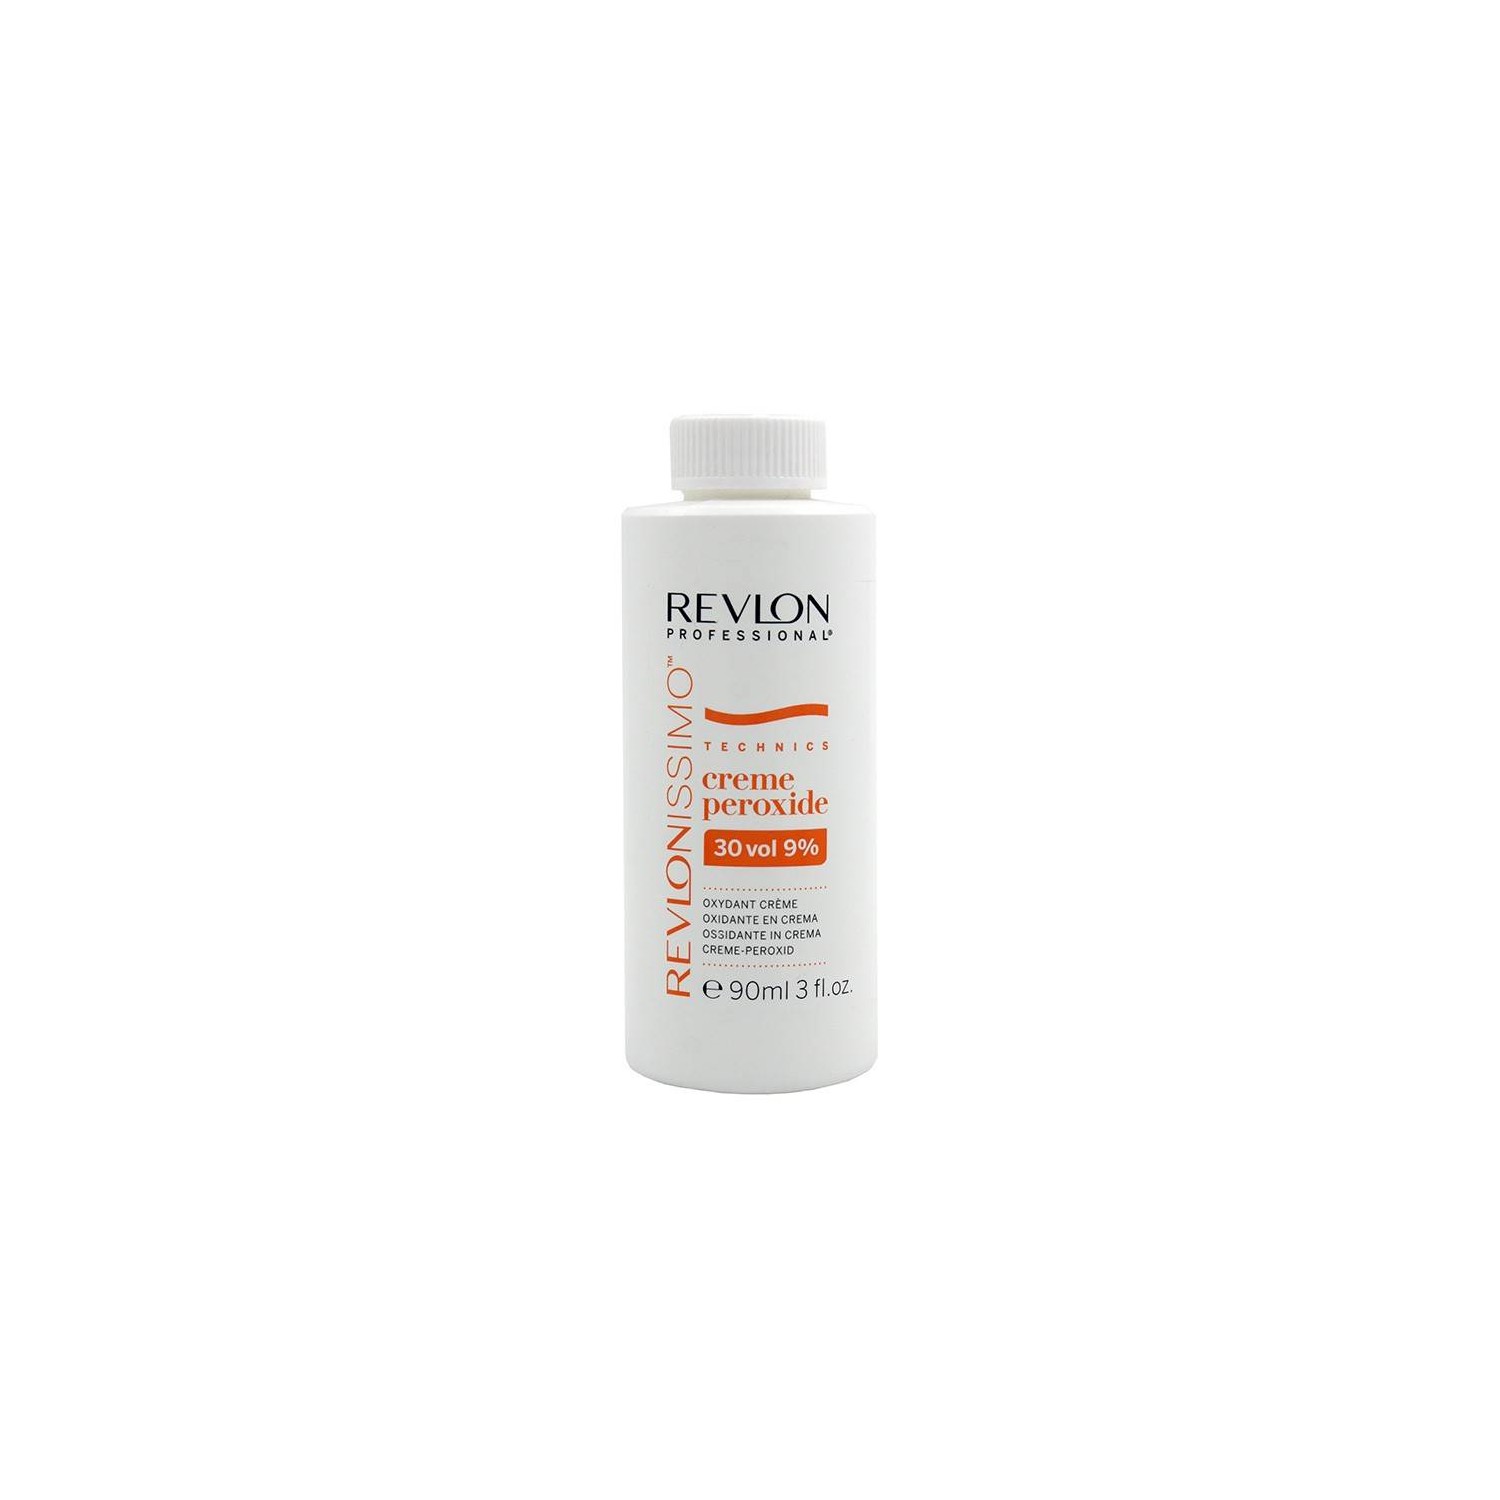 Revlon Cream Oxidant 30vol (9%) 90 ml